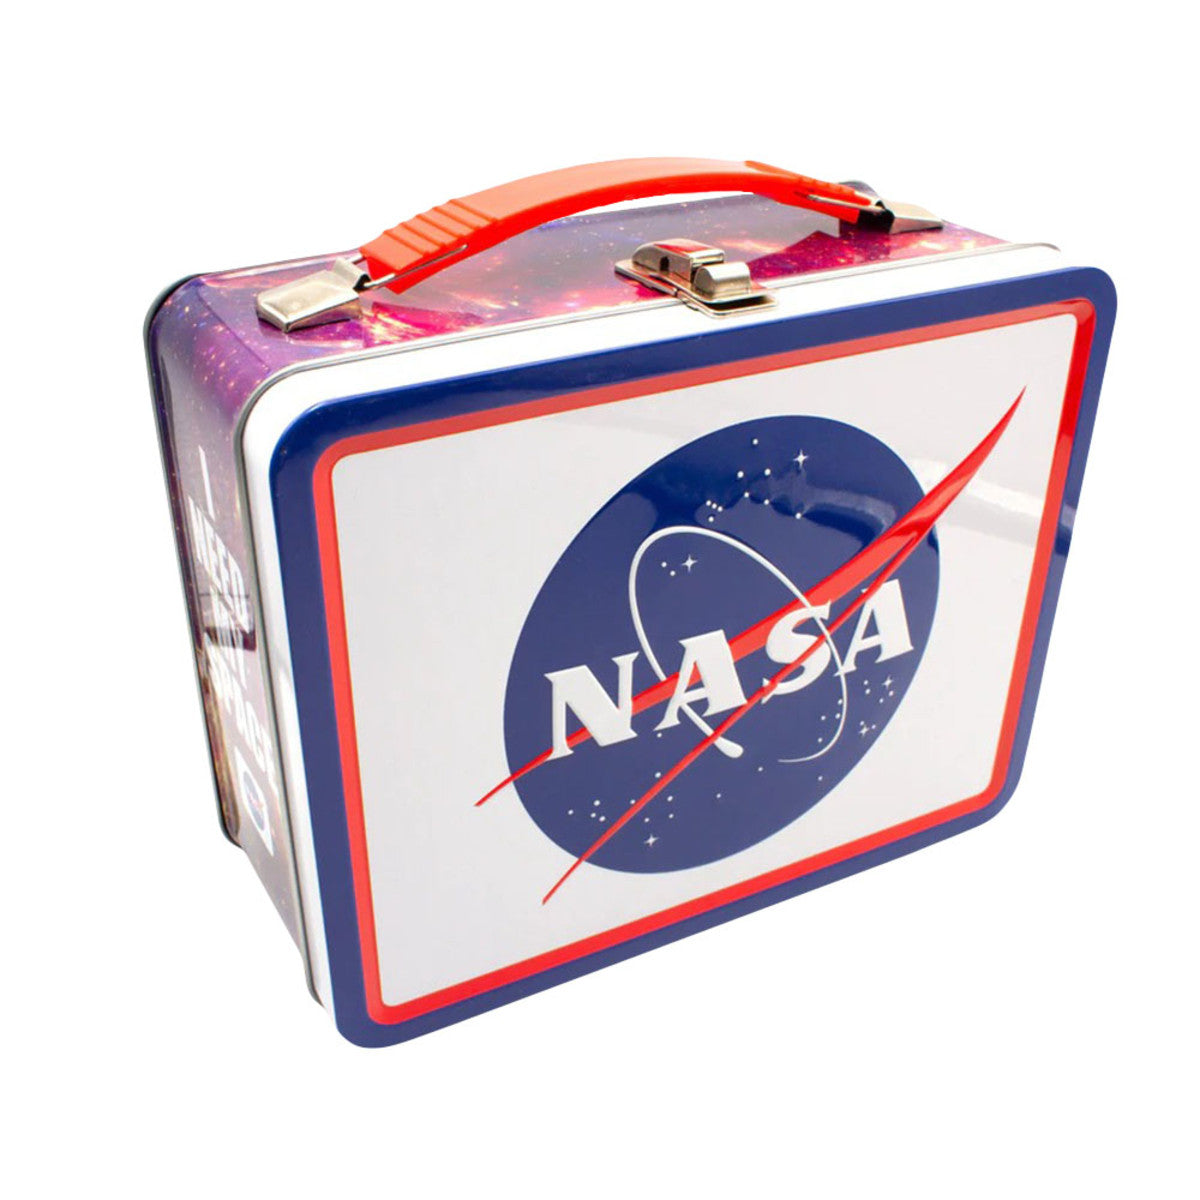 NASA Space Logo Metal Lunch Box